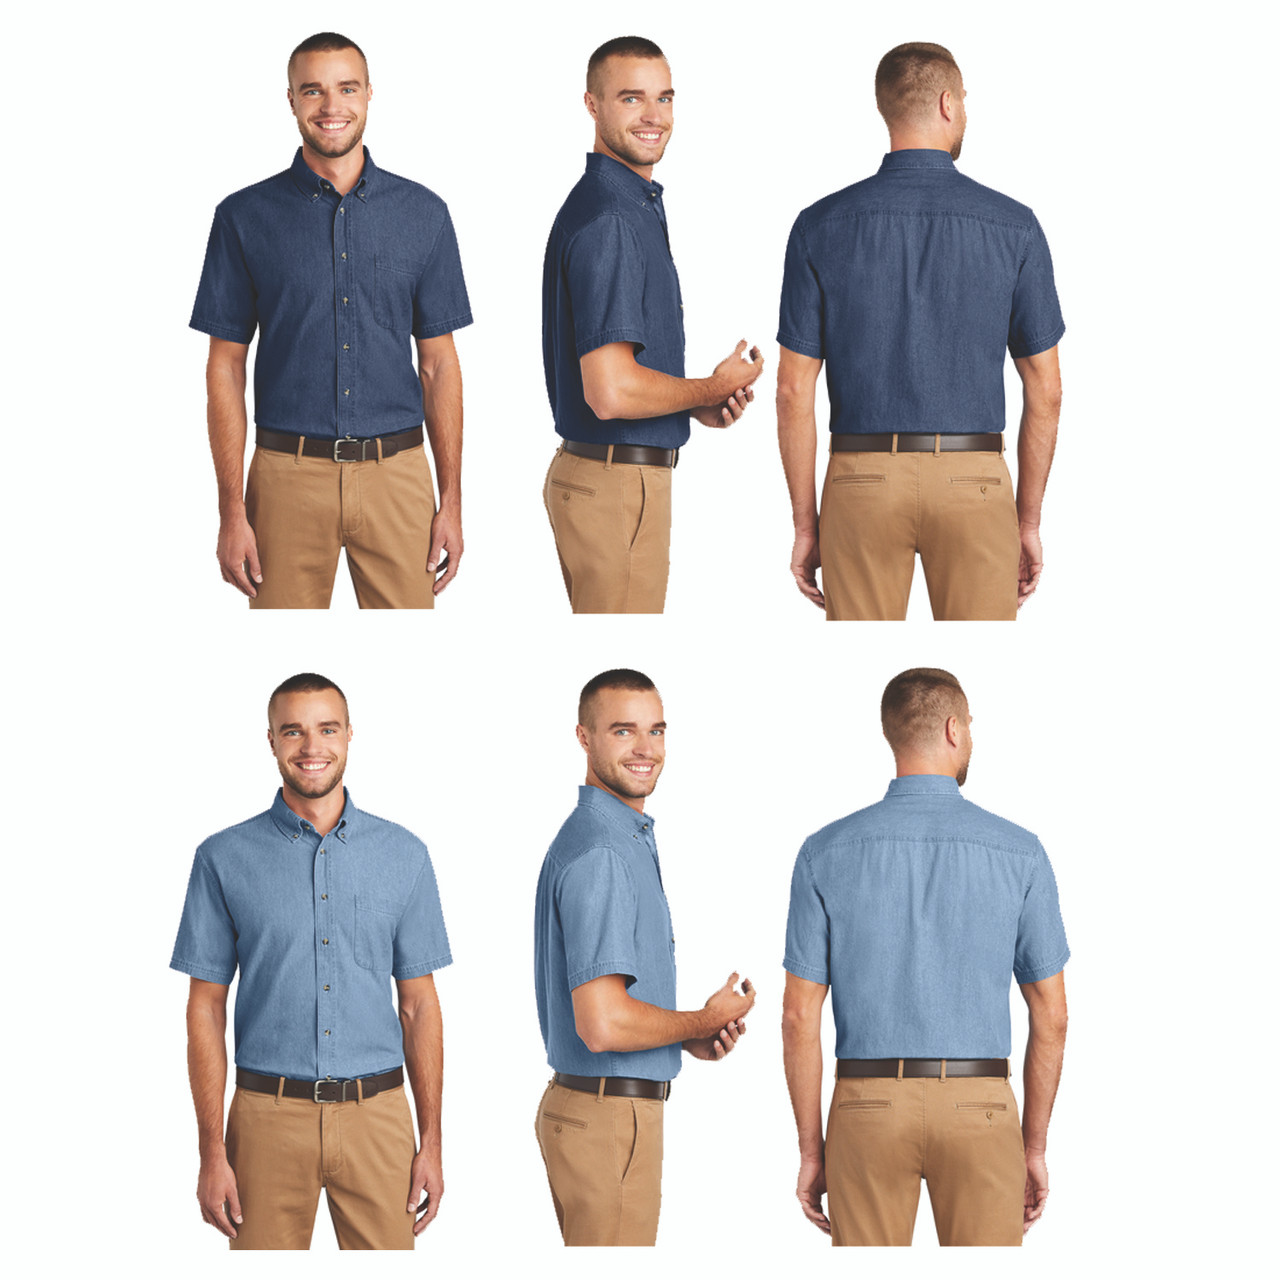 Denim Short Sleeved Shirt - Men's** (Restrictions Apply - see description)